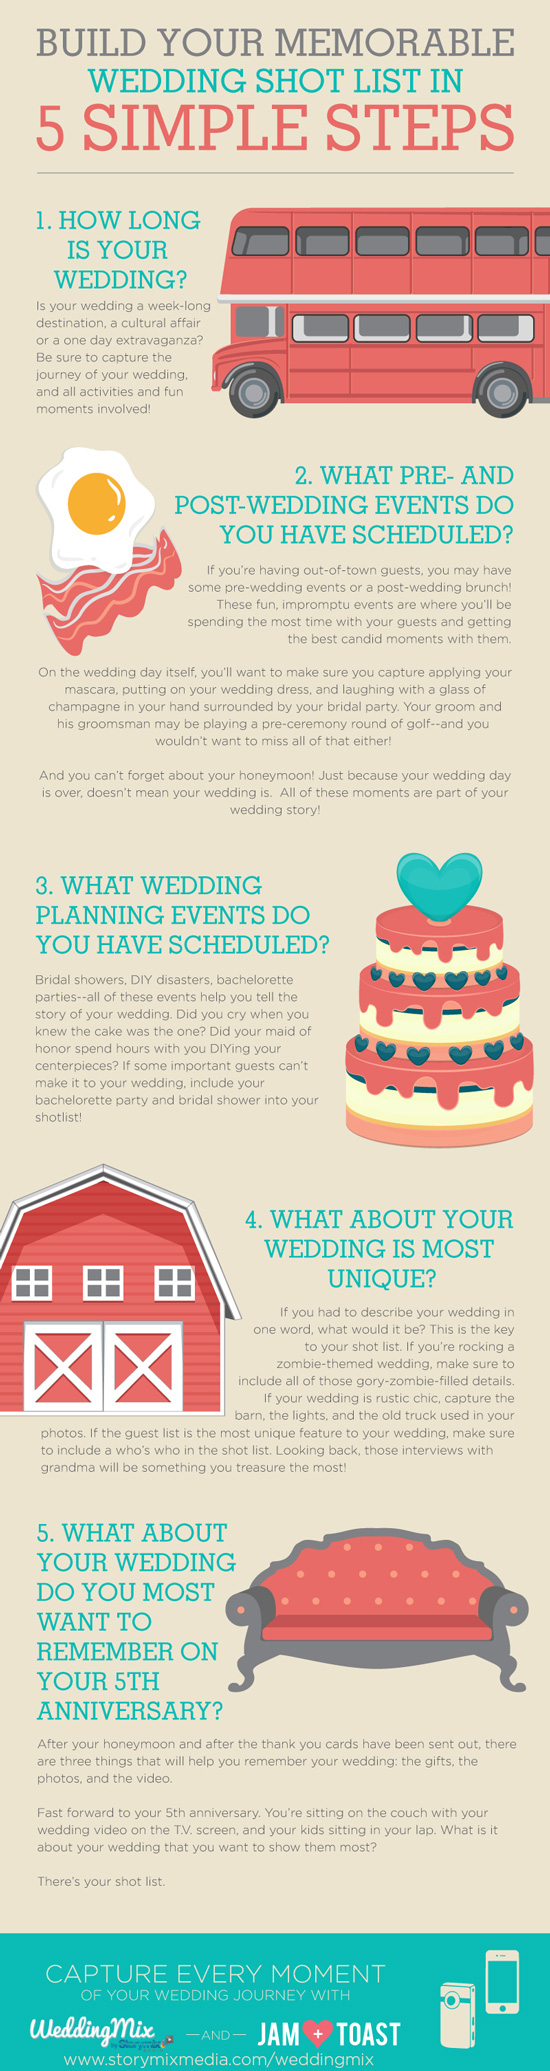 build-your-memorable-wedding-shot-list-in-5-simple-steps